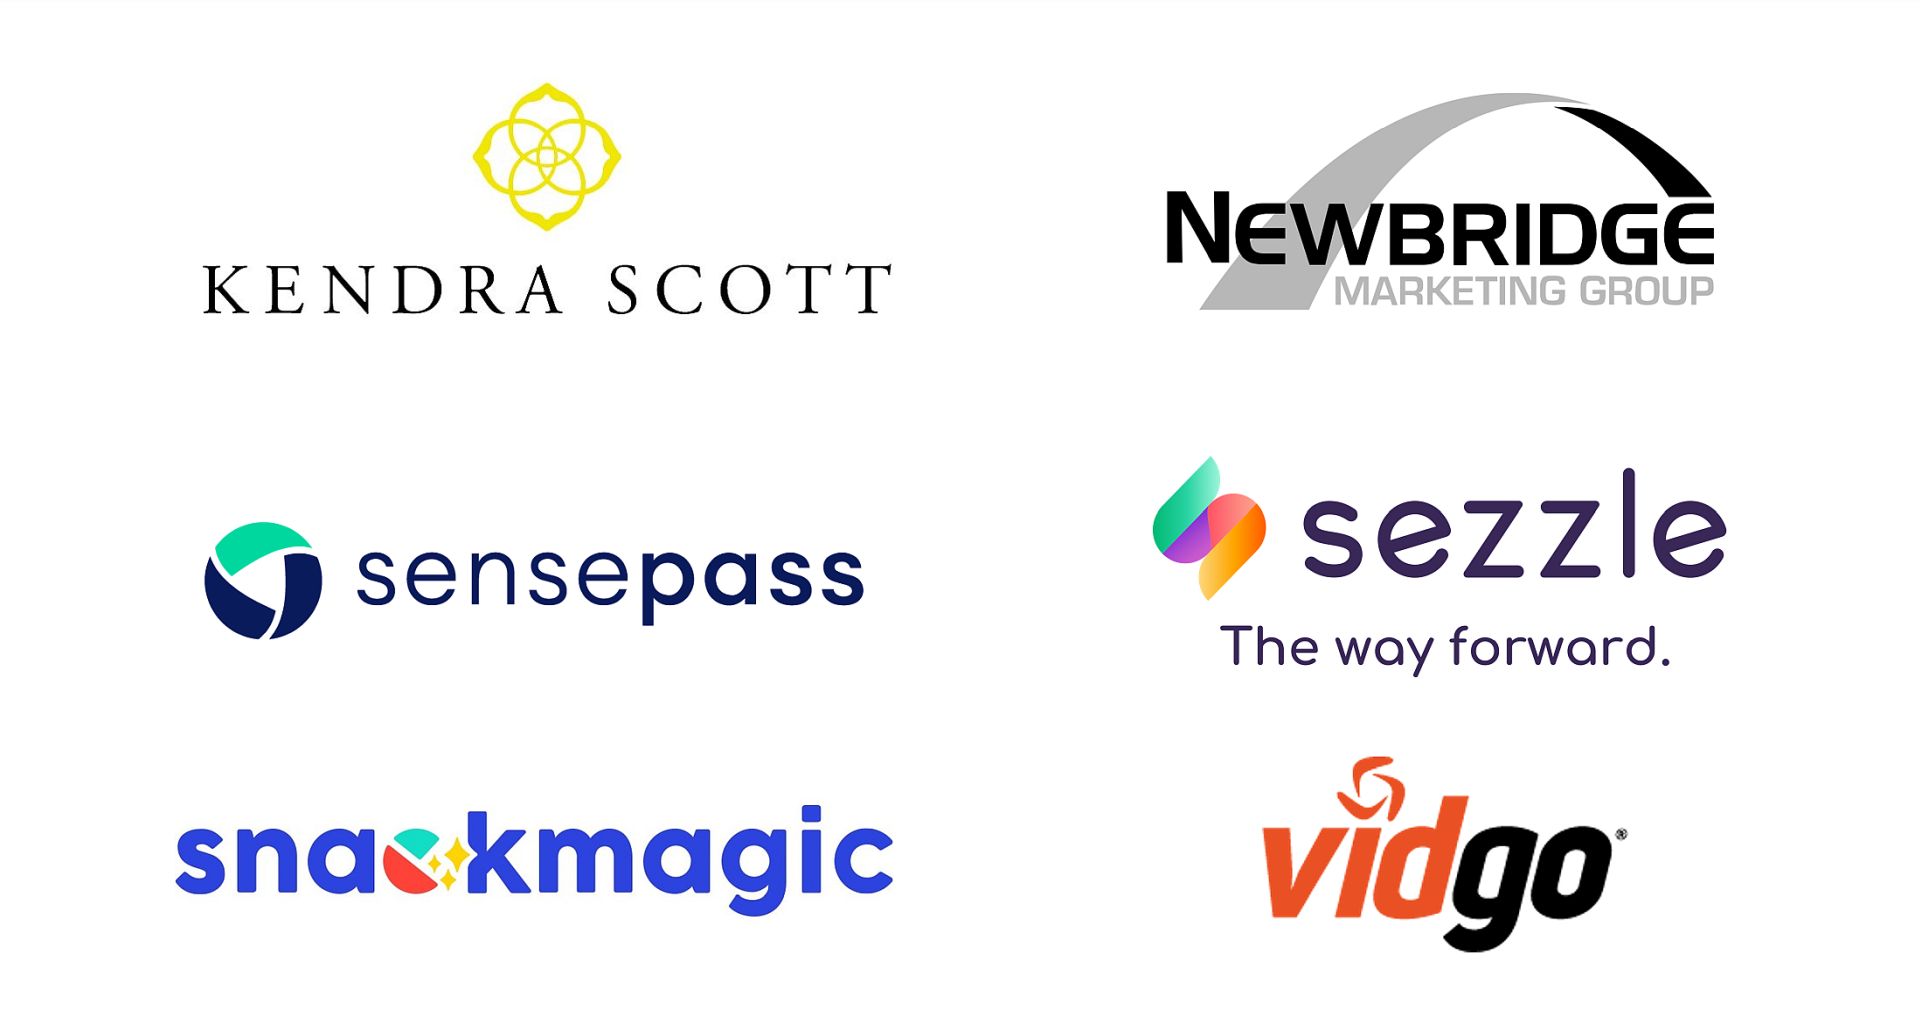 Montage of logos for the companies: Kendra Scott, Newbridge Marketing, Sensepass, Sezzle, Snackmagic, and Vidgo